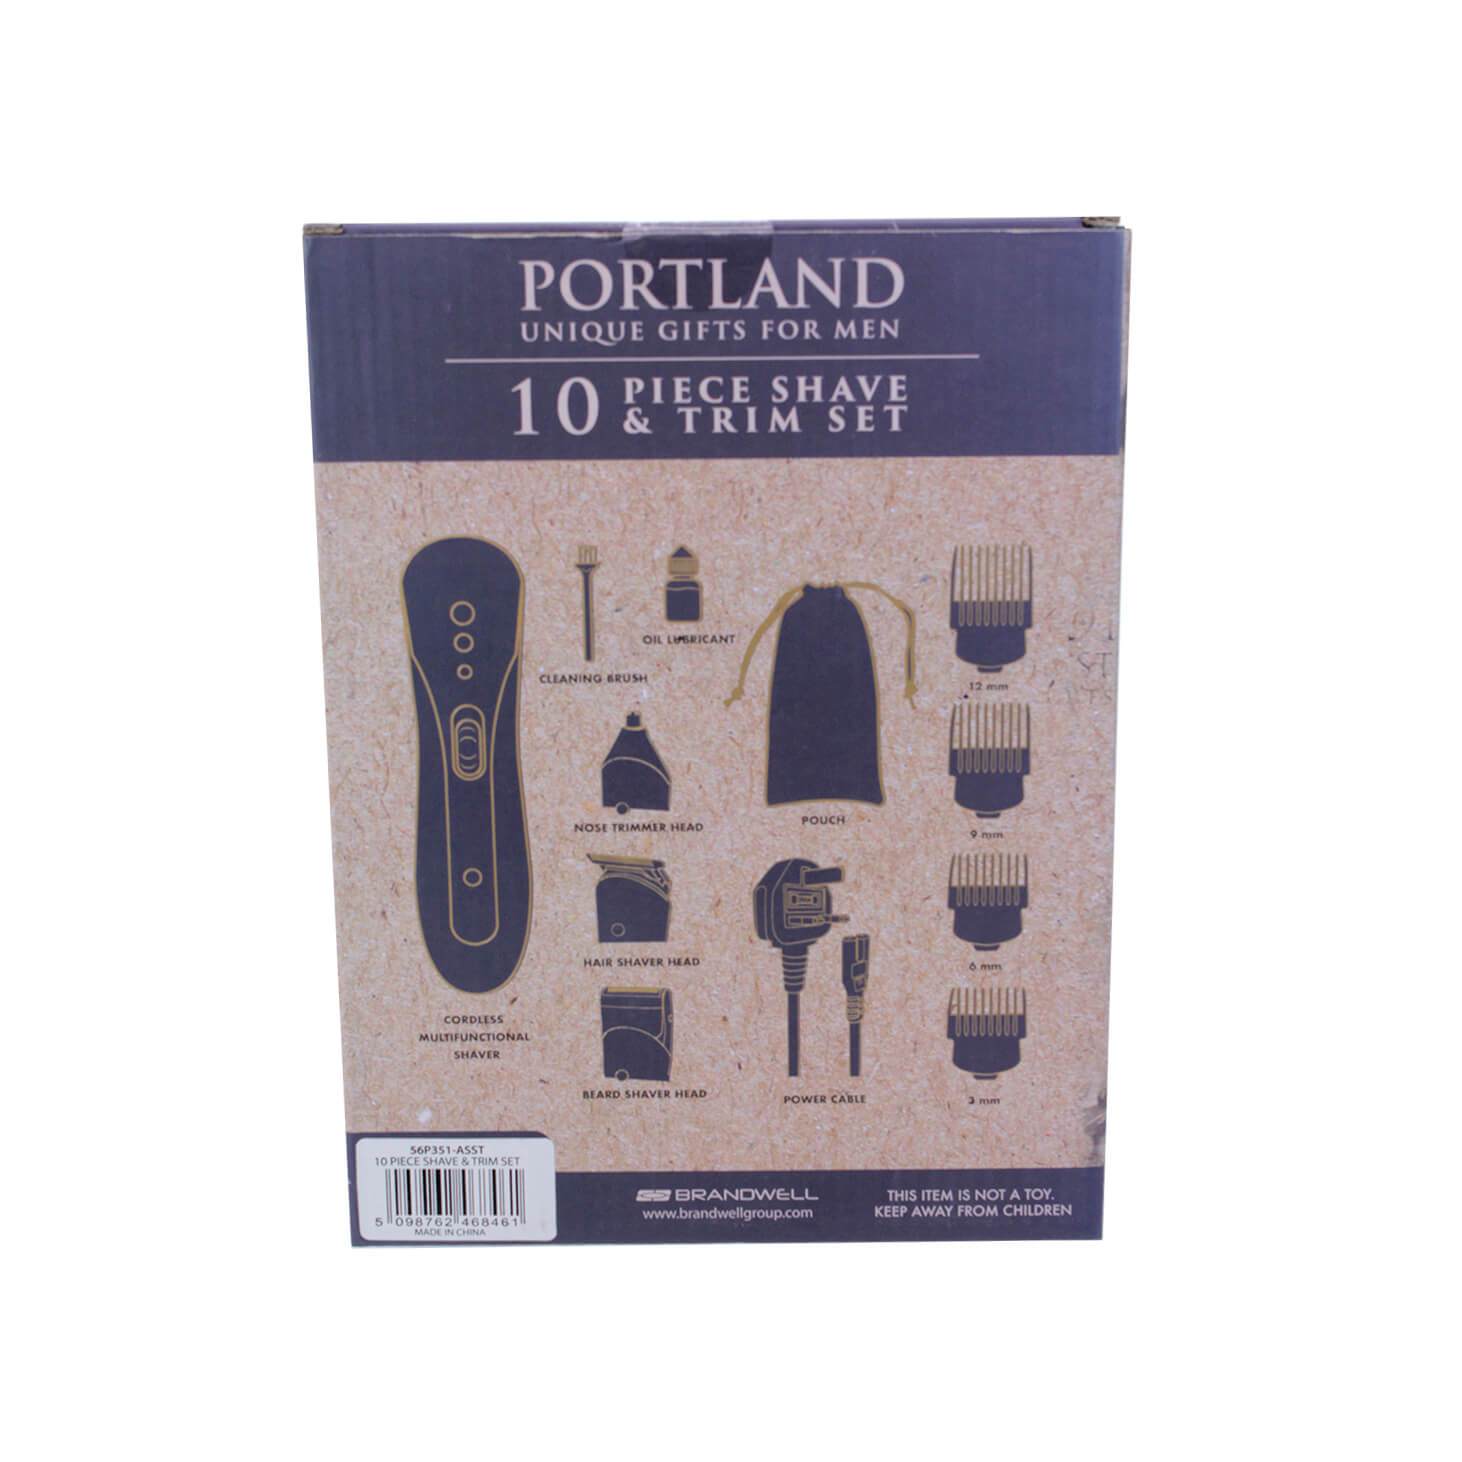 Portland 10 Piece Shave & Trim Gift Set